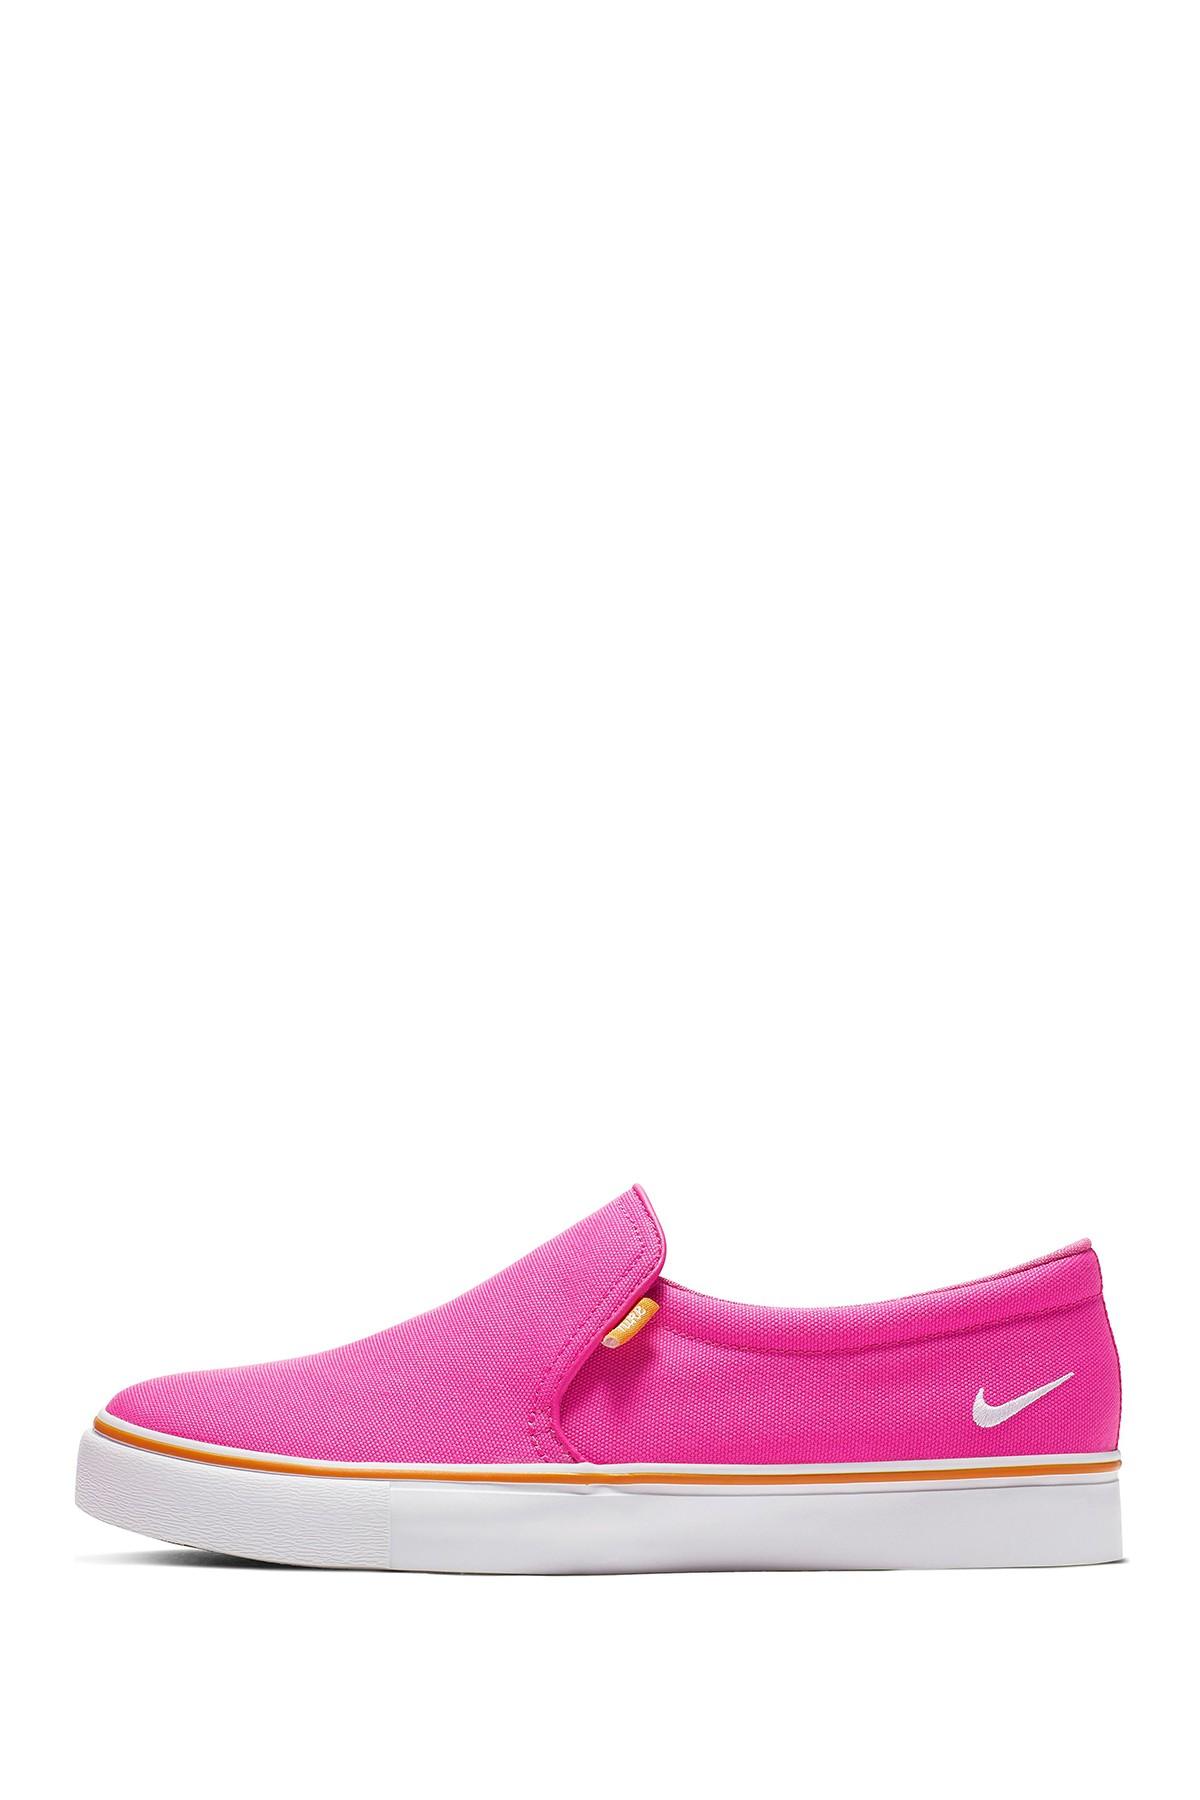 Nike Royale Slip-on Sneaker in Pink | Lyst